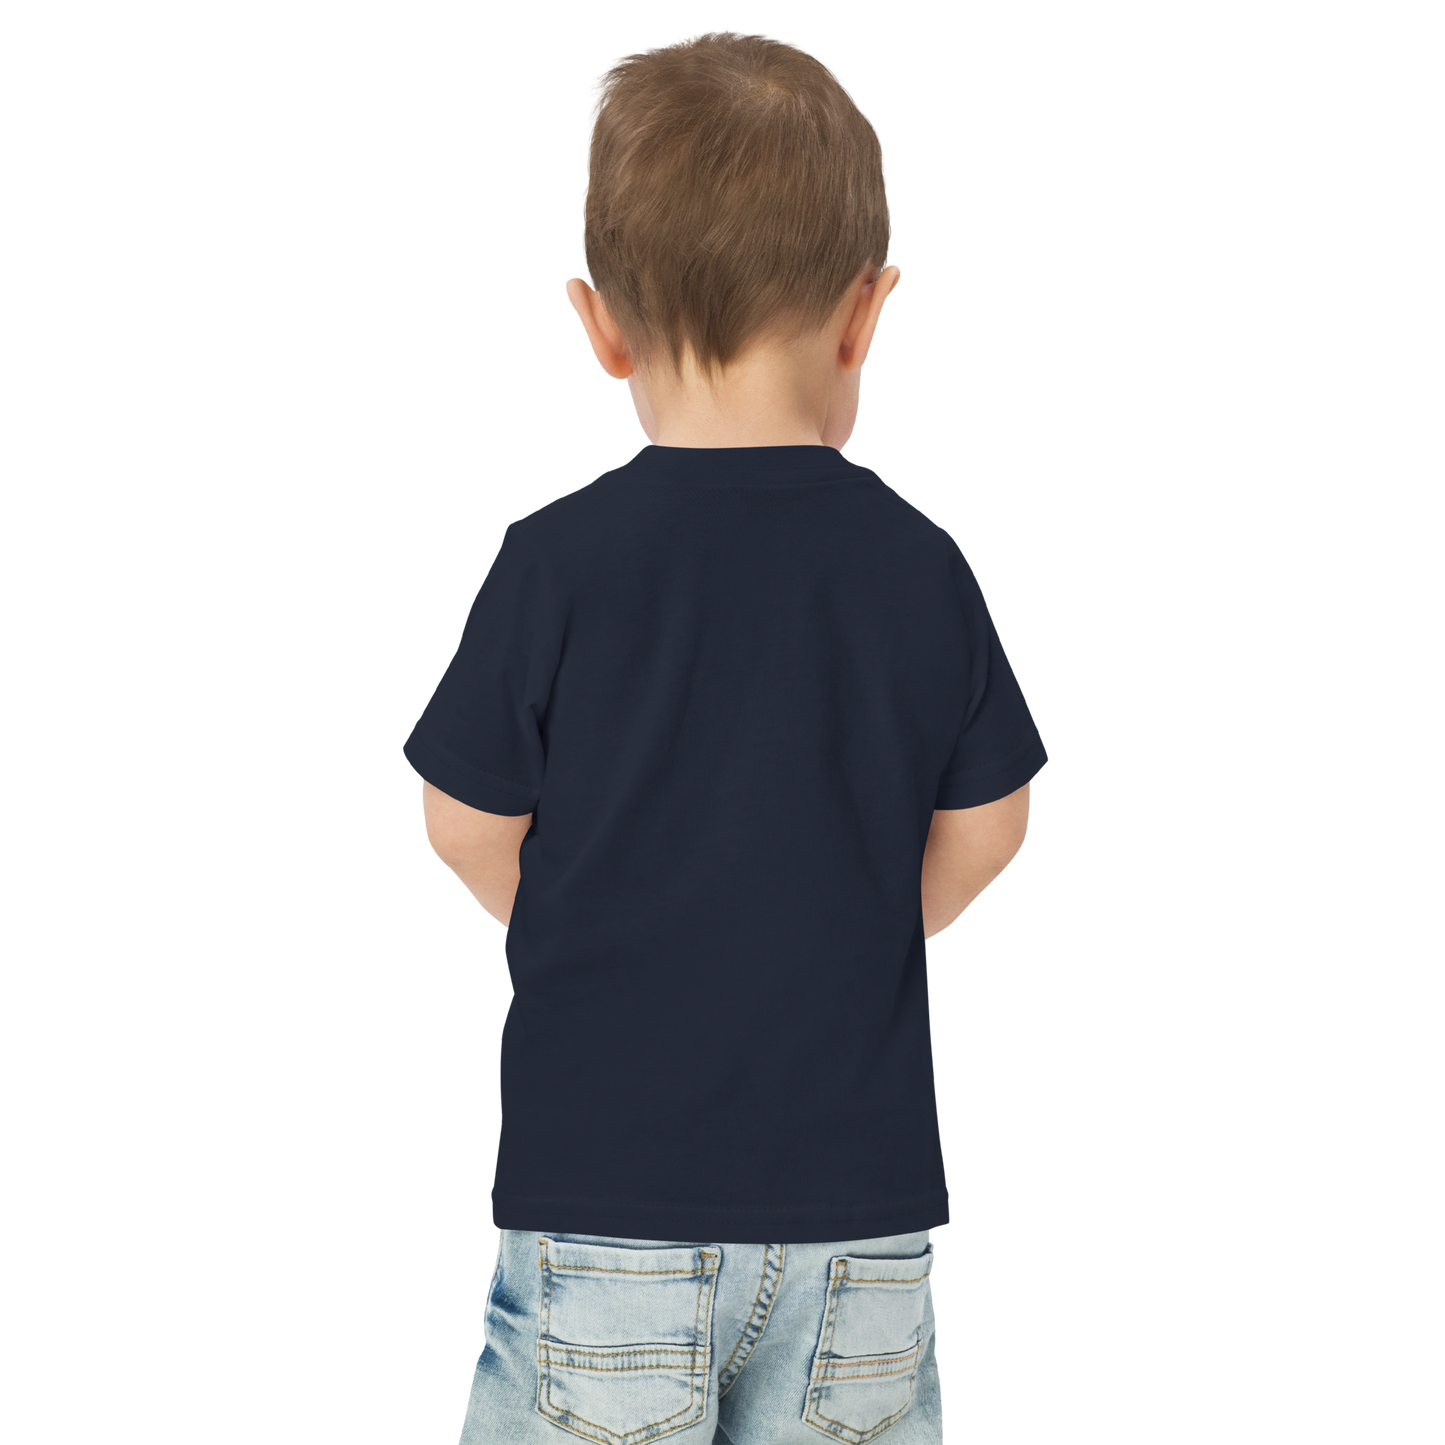 Great Lakes Toddler T-Shirt (Patriotic Edition) | Short Sleeve